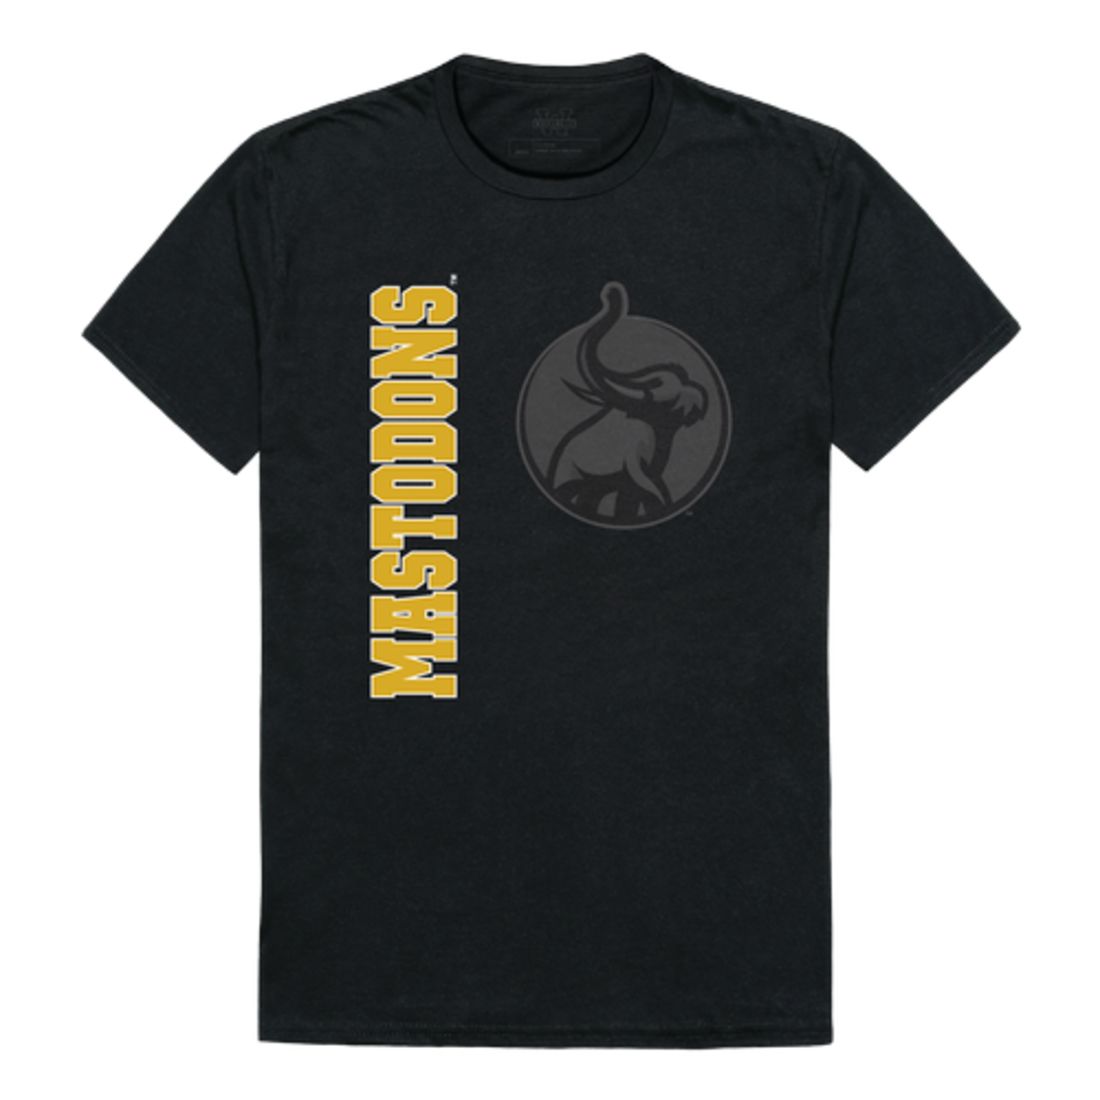 Purdue University Fort Wayne Mastodons Ghost T-Shirt Tee